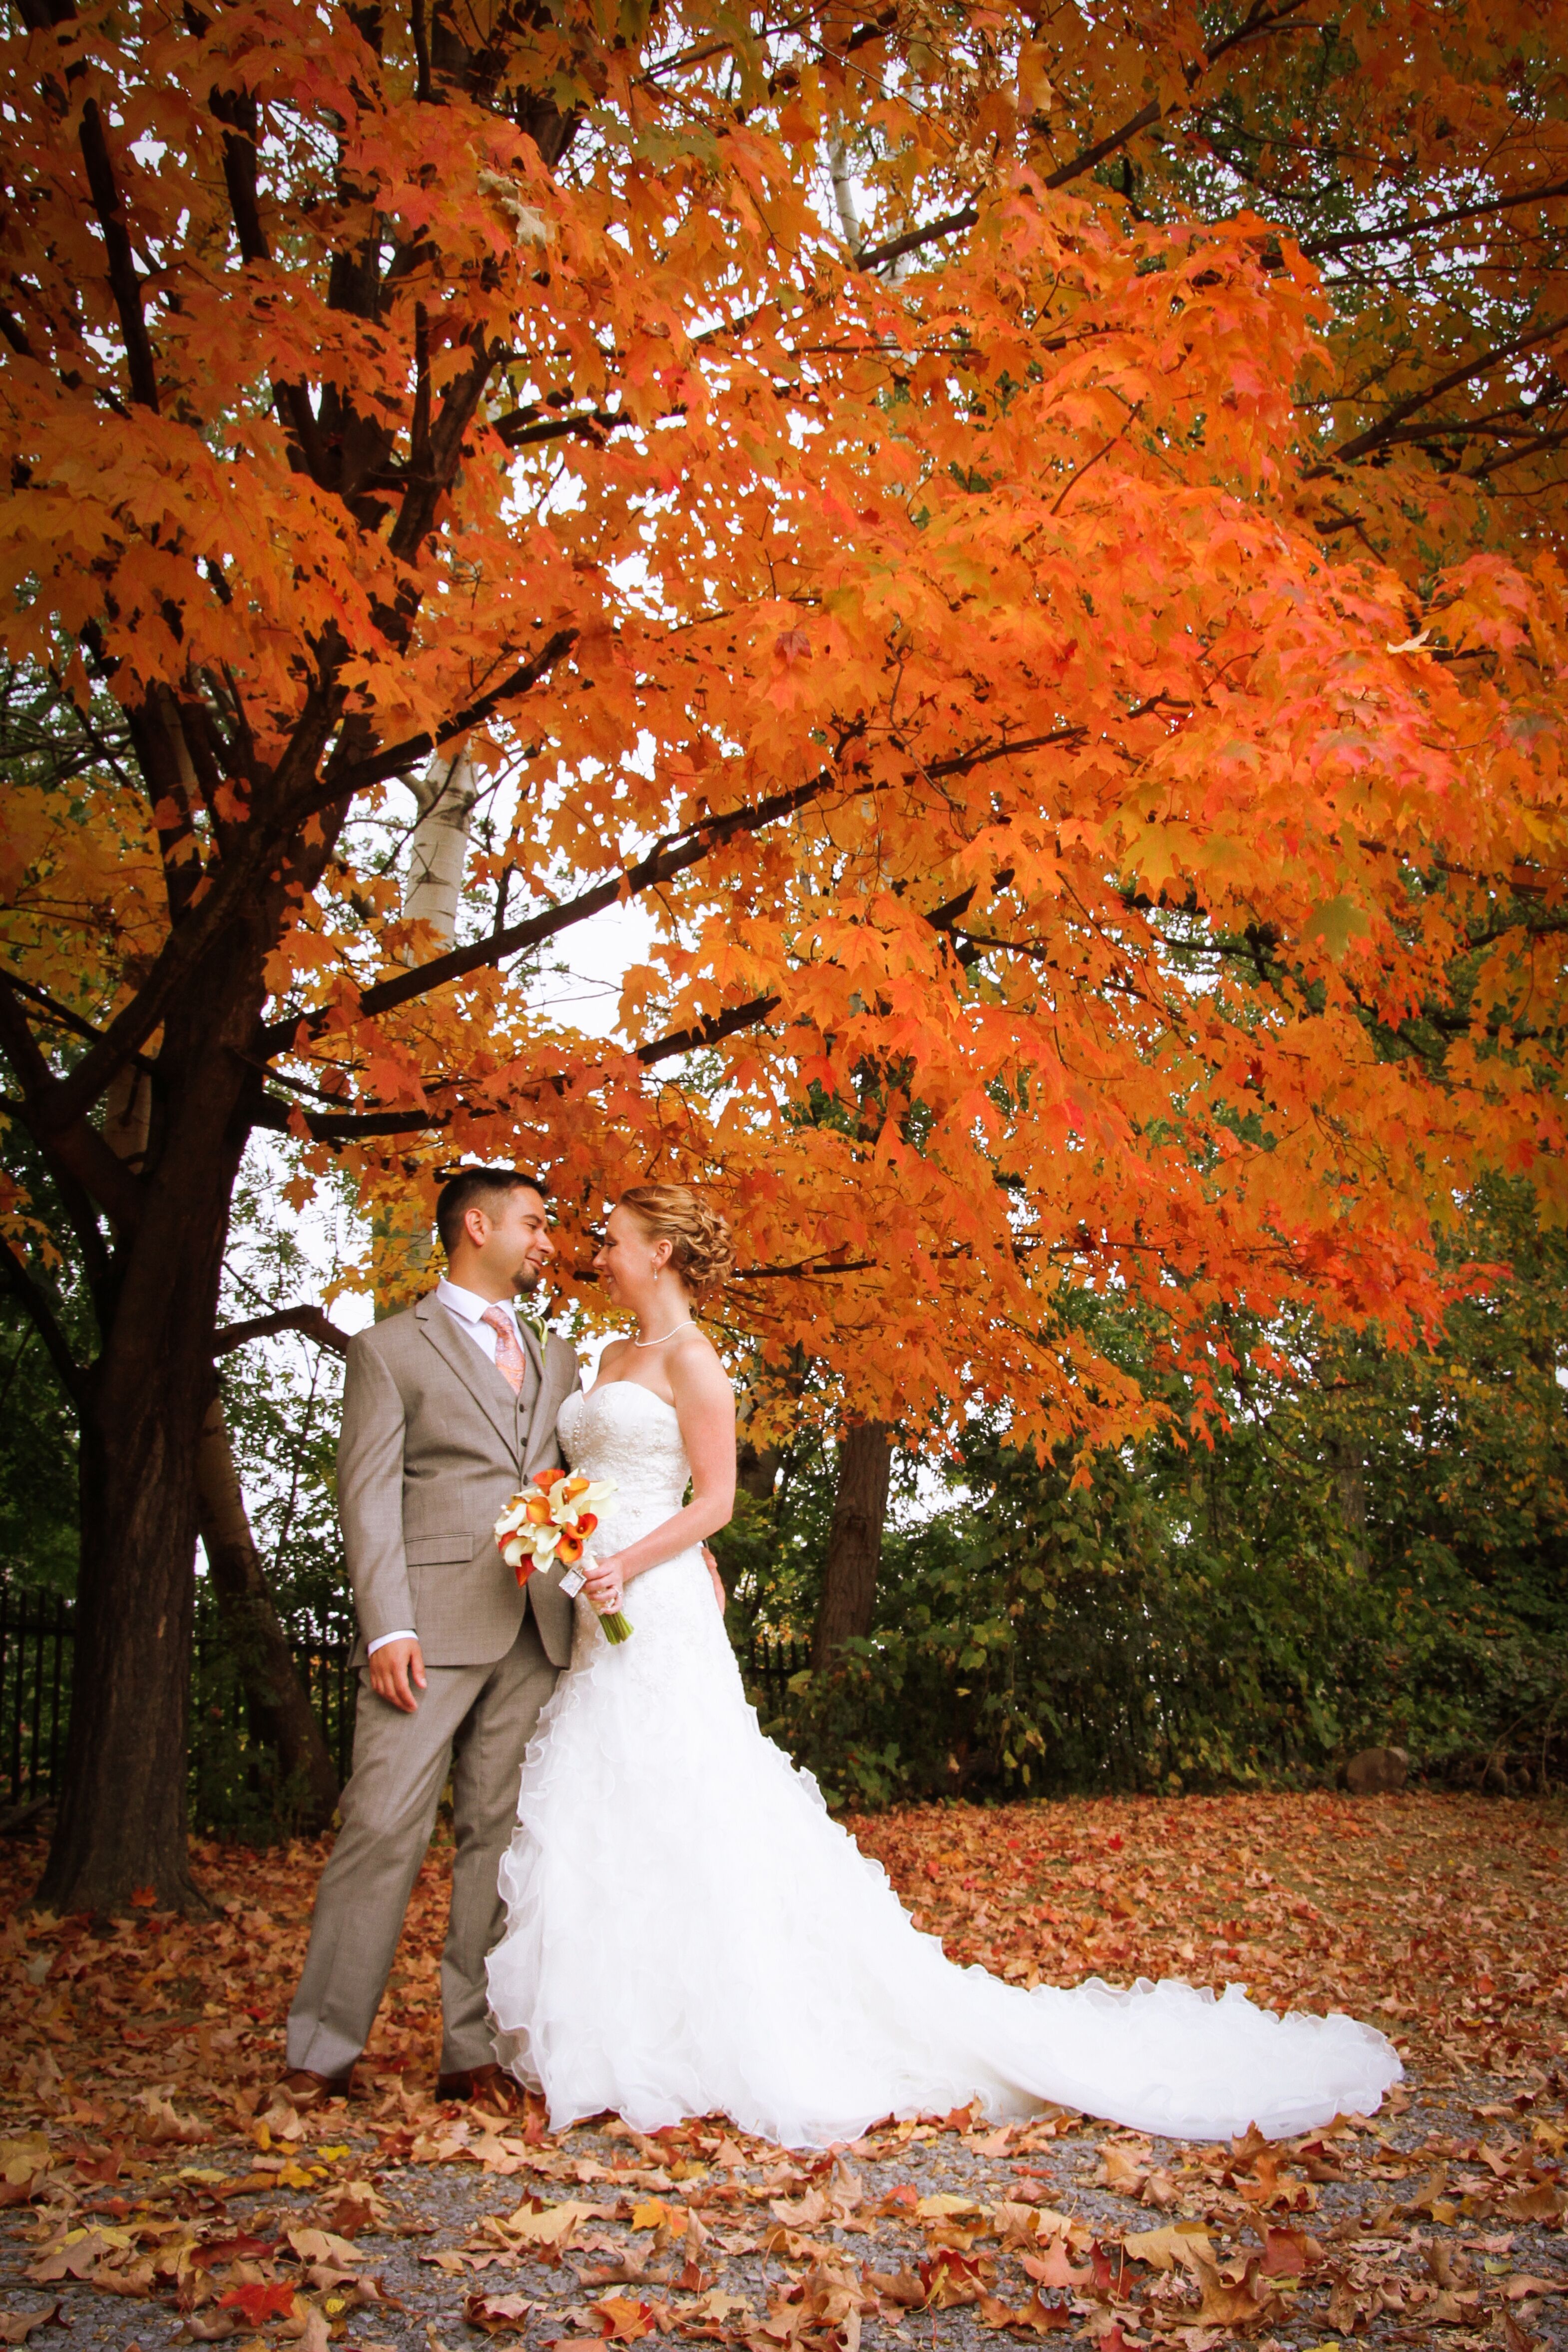 A Classic Fall Wedding at Belhurst Castle in Geneva, New York